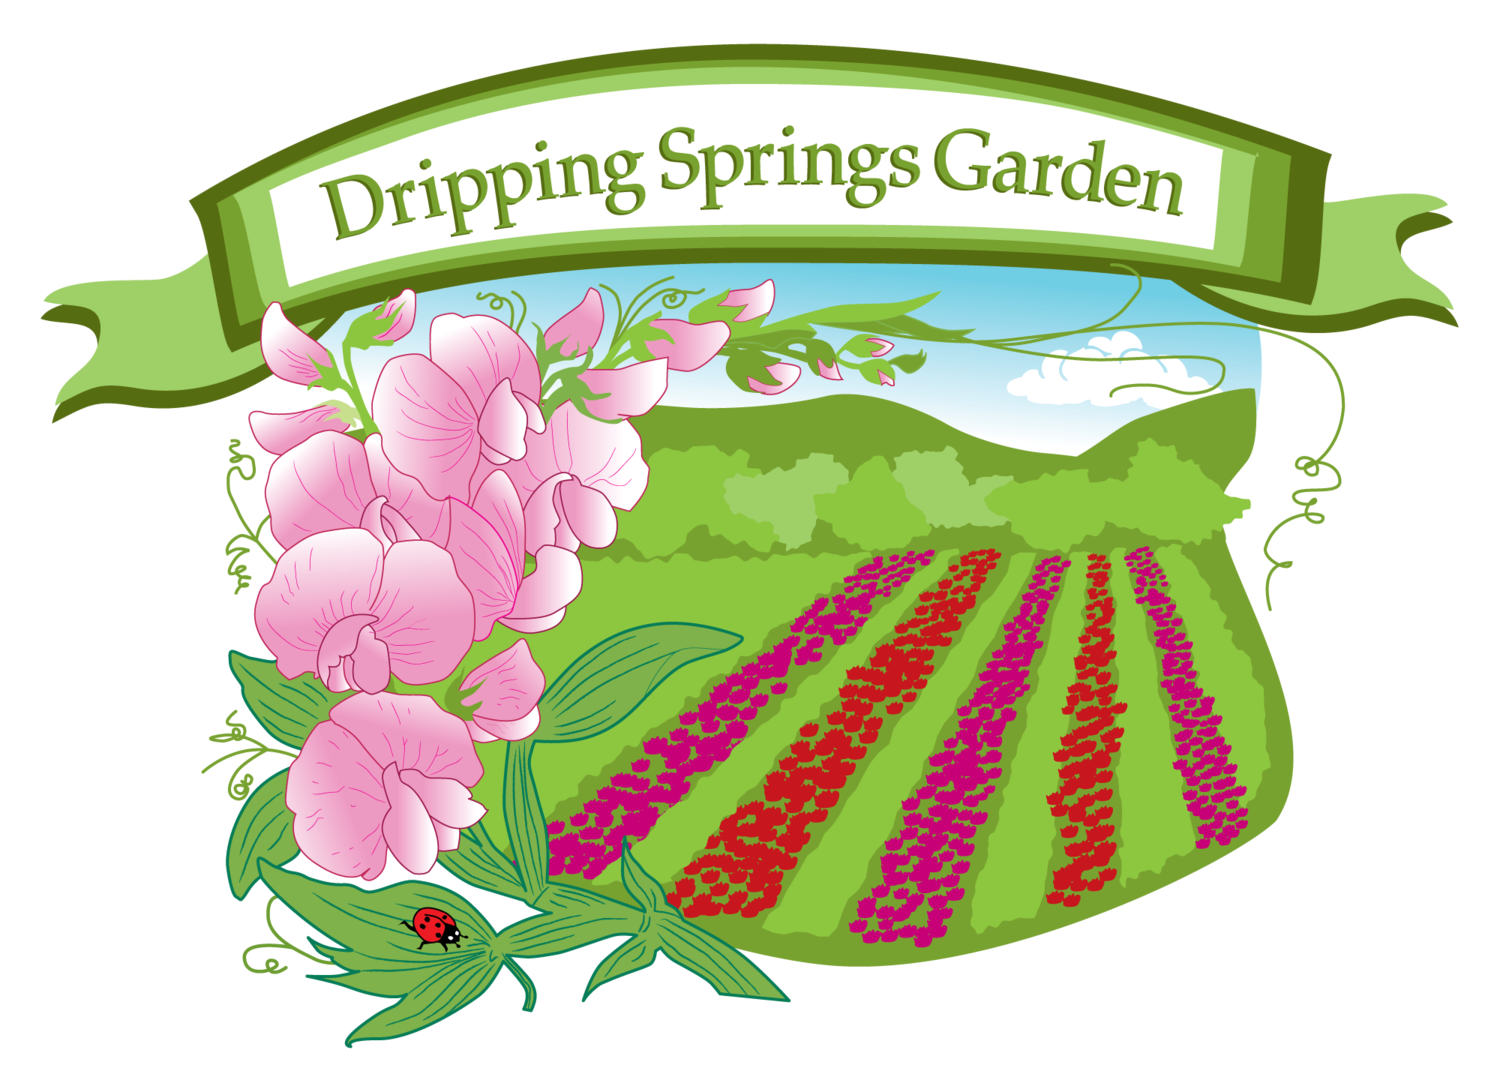 Dripping Springs Garden